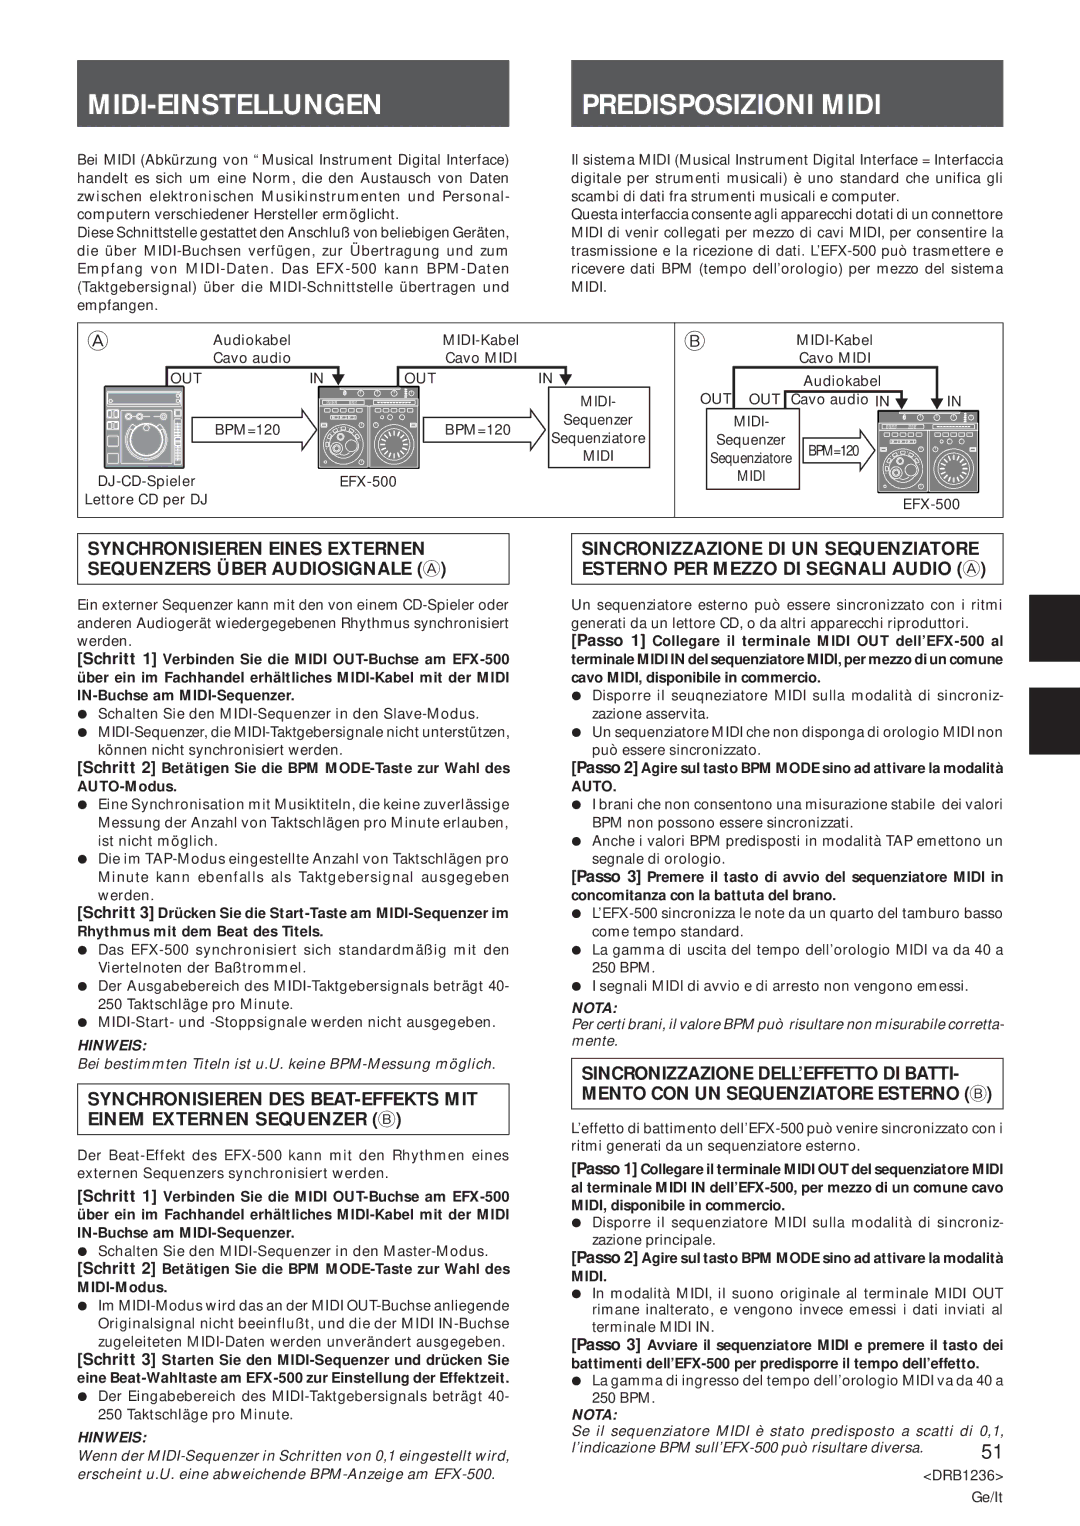 Pioneer Efx-500 operating instructions MIDI-EINSTELLUNGEN Predisposizioni Midi 